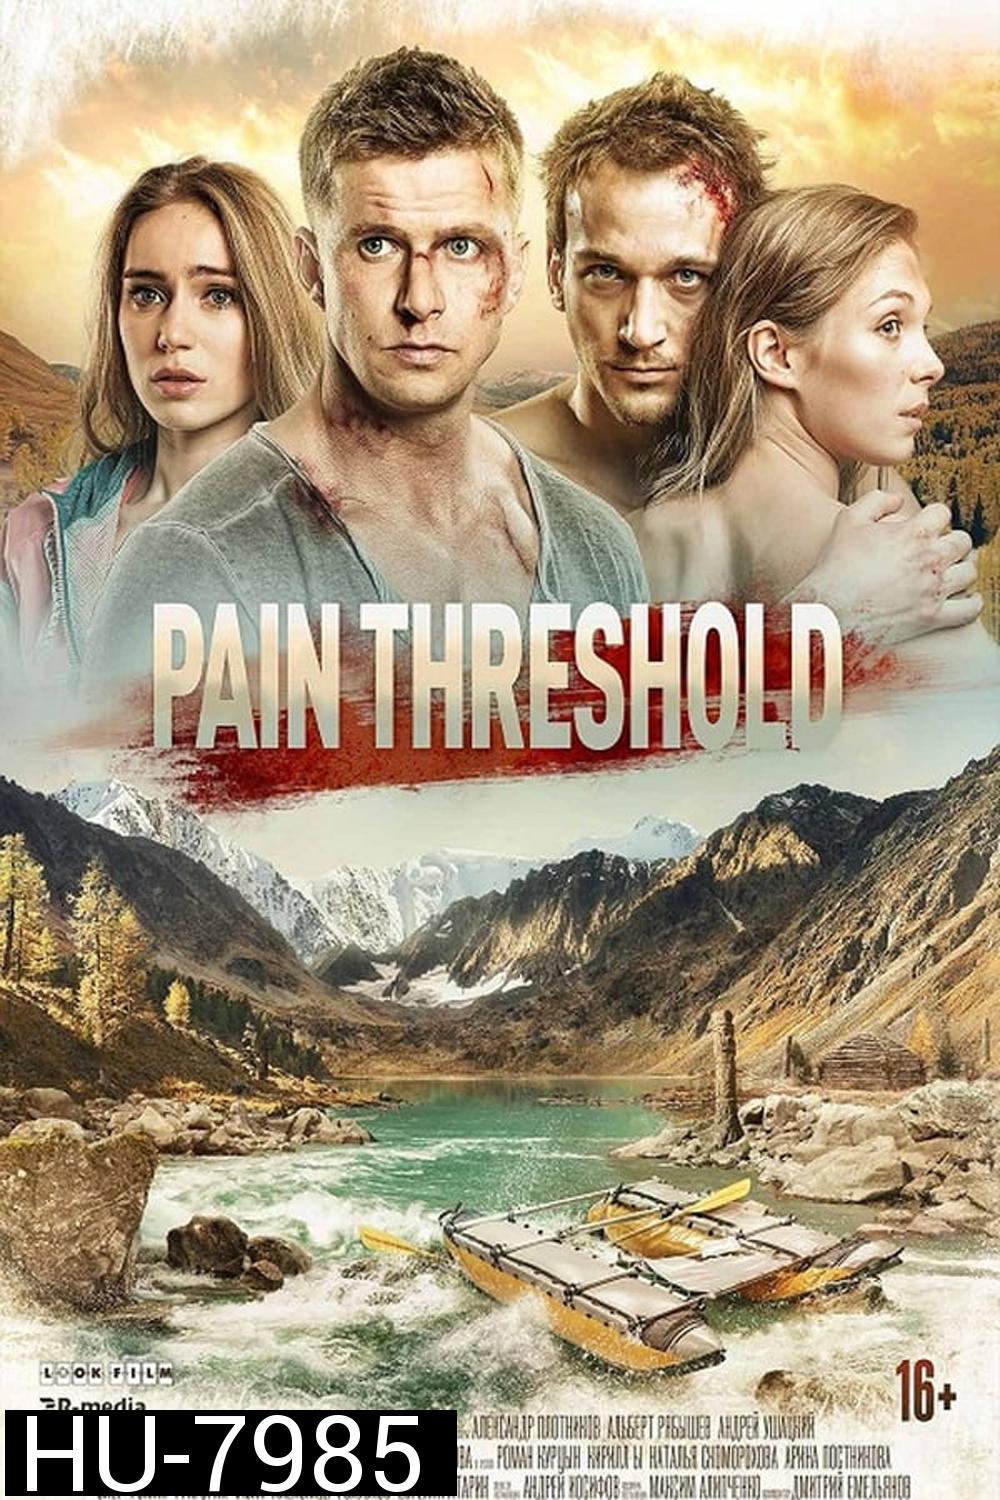 Pain Threshold ทริประทึก ( 2019 )